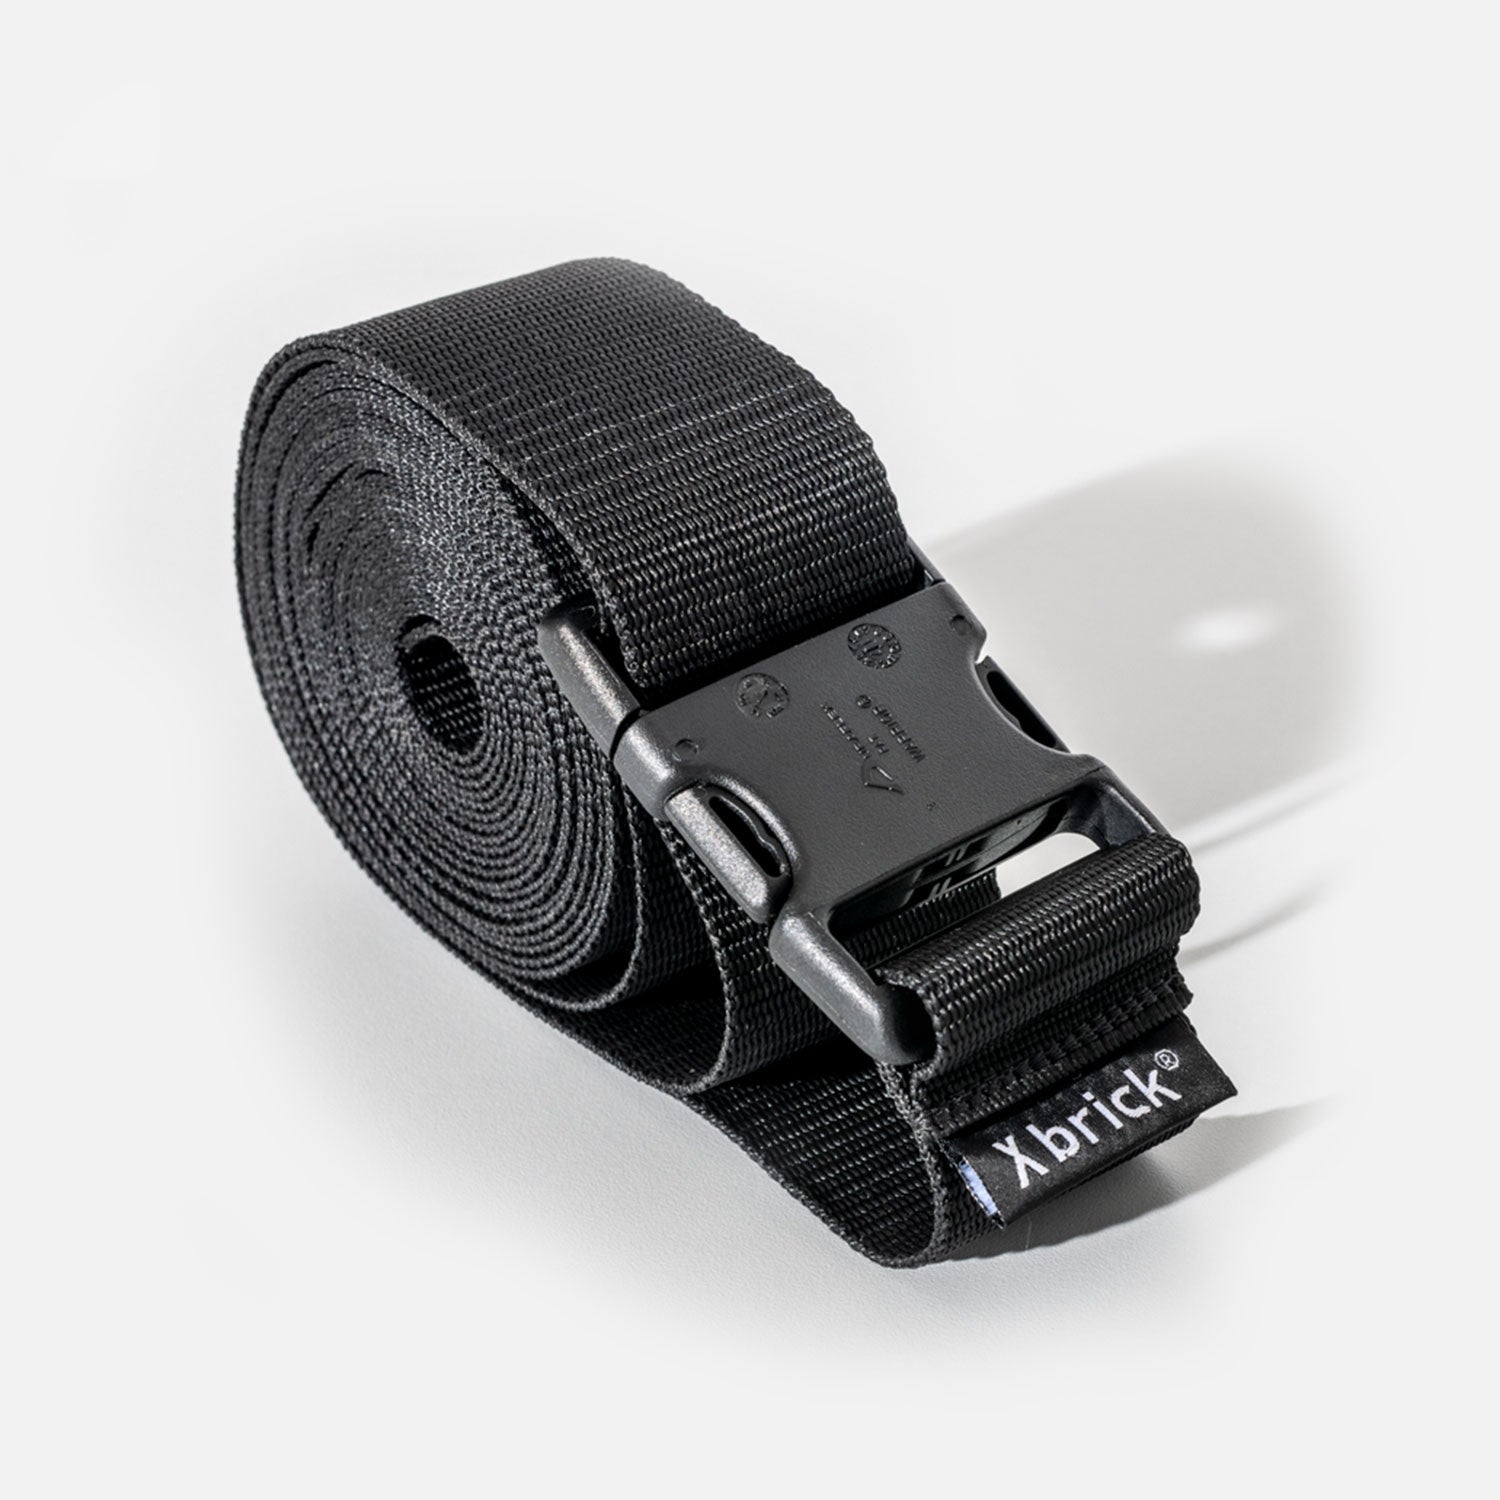 Connecting belt - X-belt